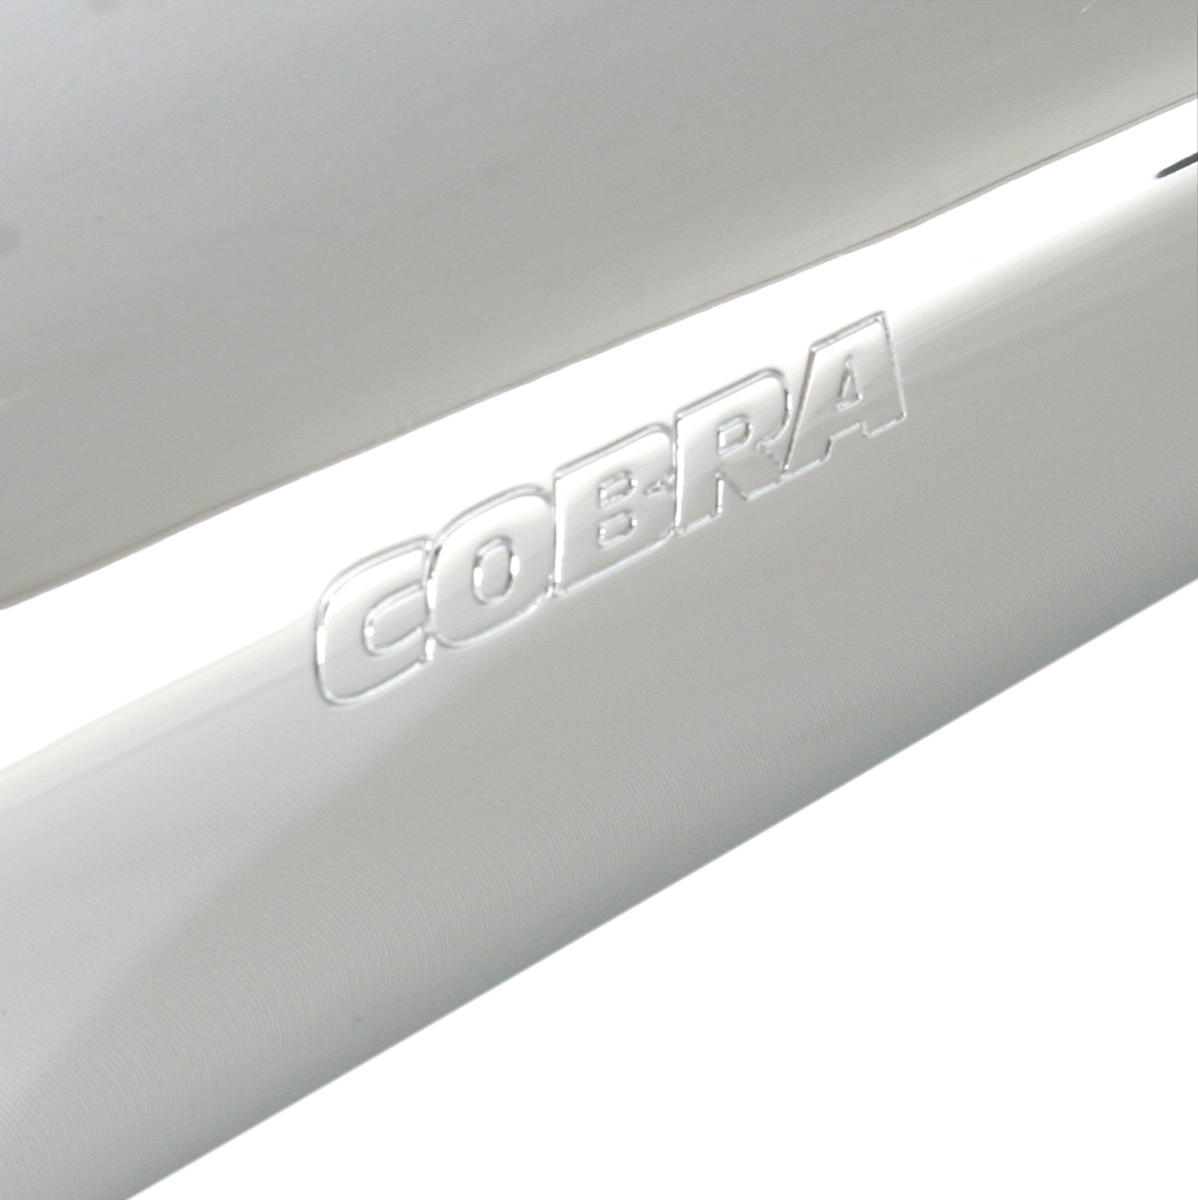 Silenciador COBRA festoneado cromado para XVS 1300 Stryker 2011-2017 2270 